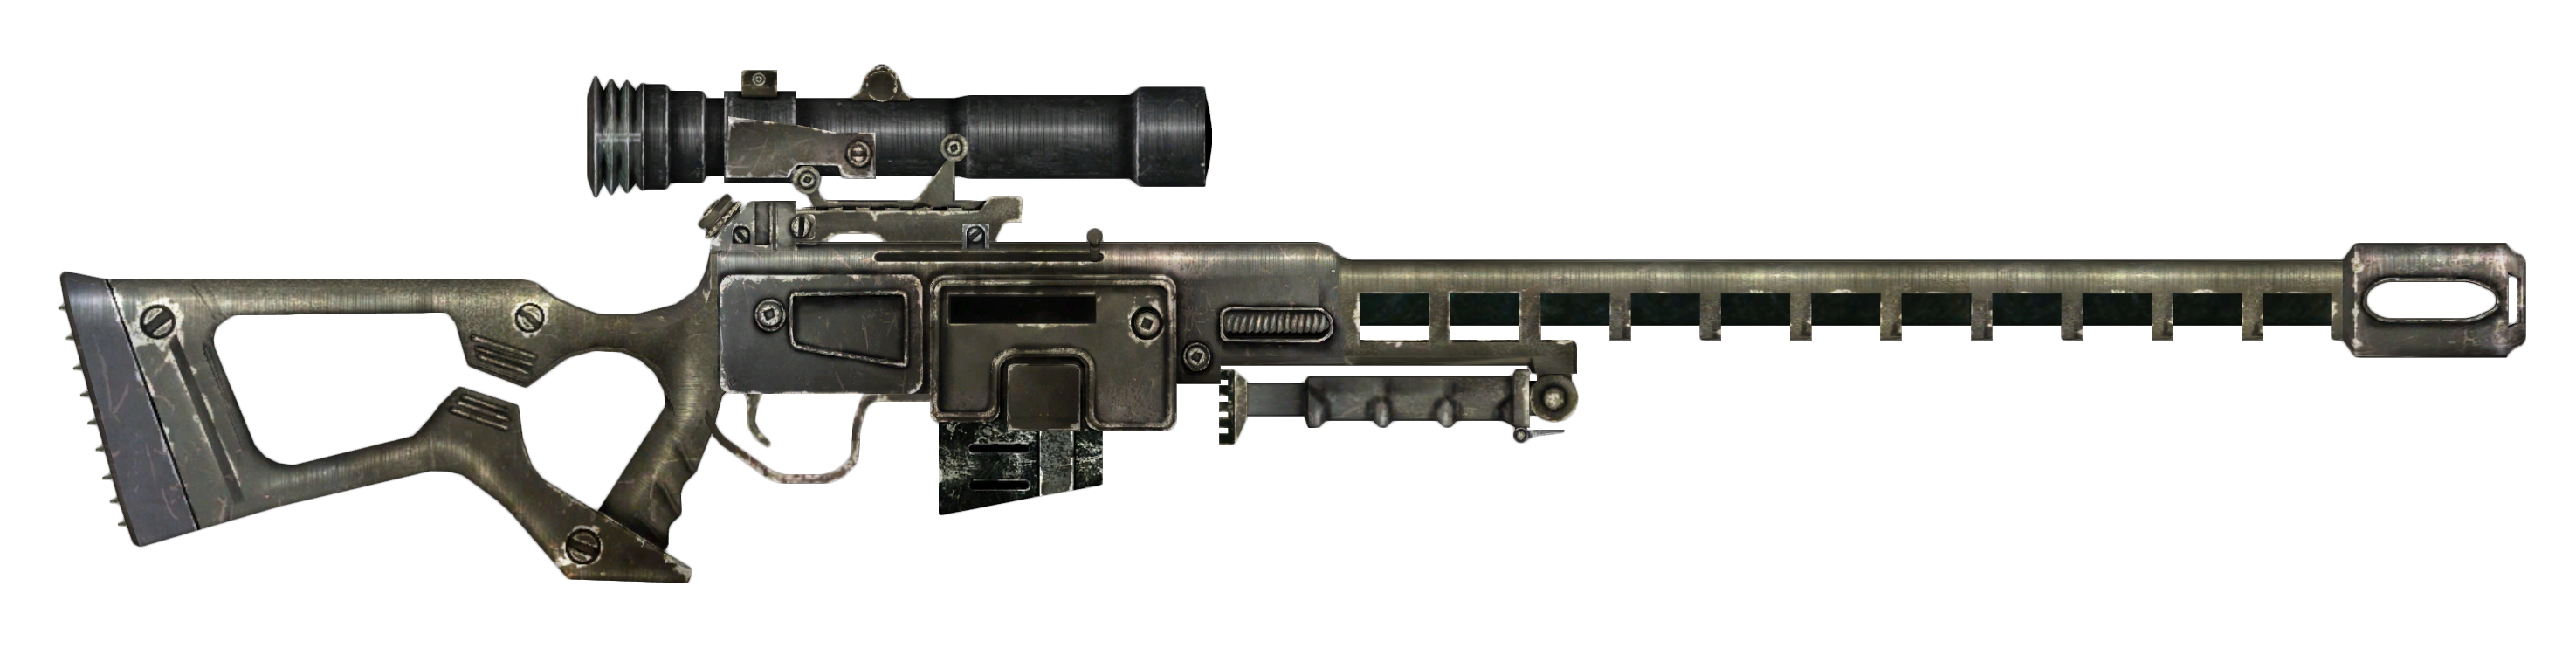 Fallout new vegas sniper rifle location